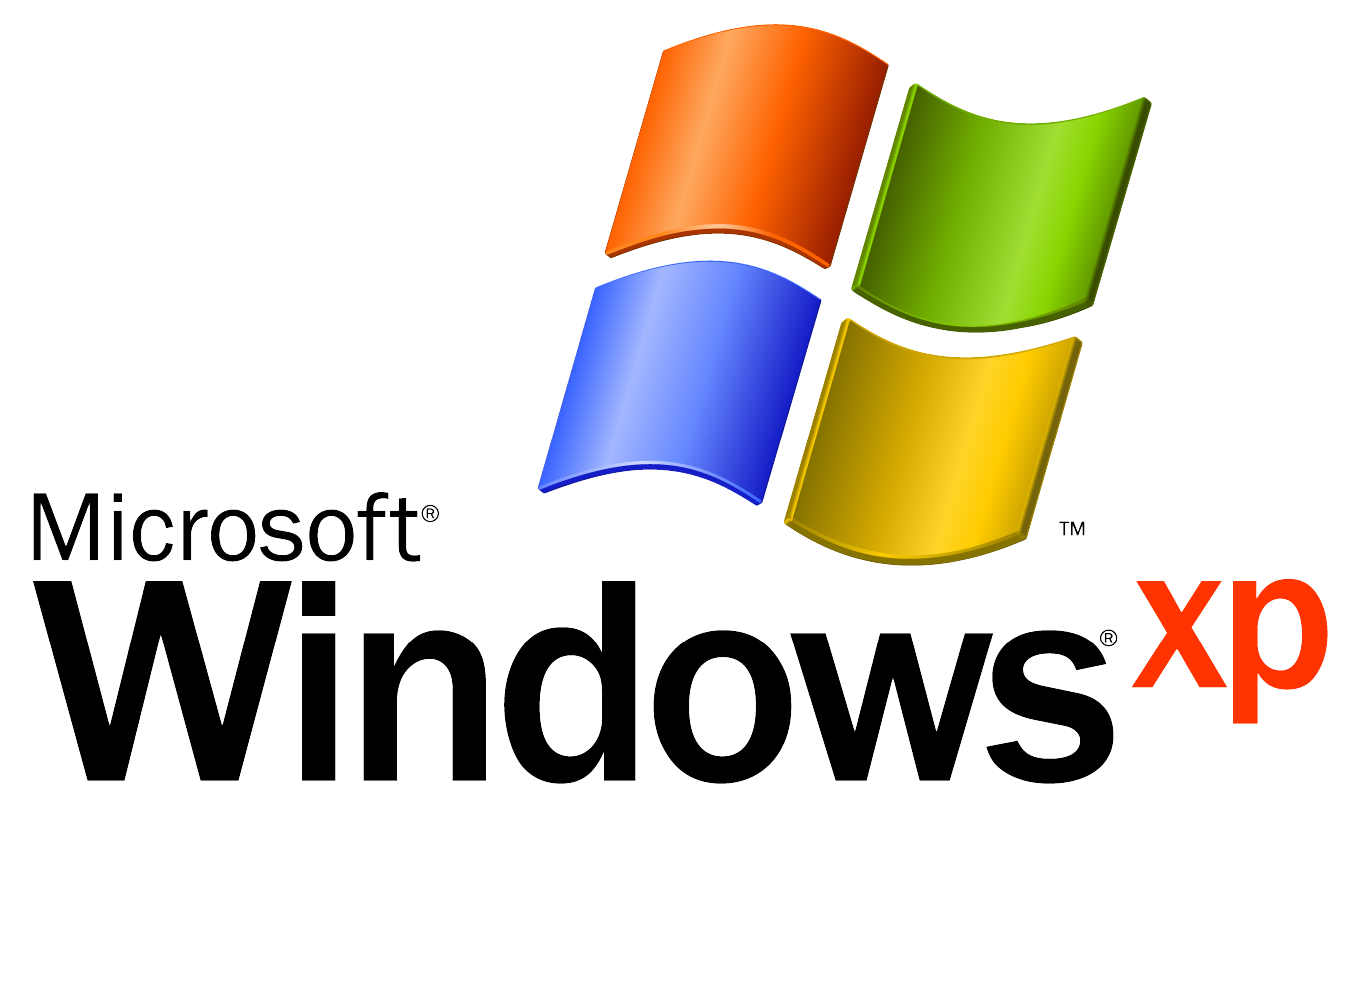 Windows xp the sad. Pc clipart computer error